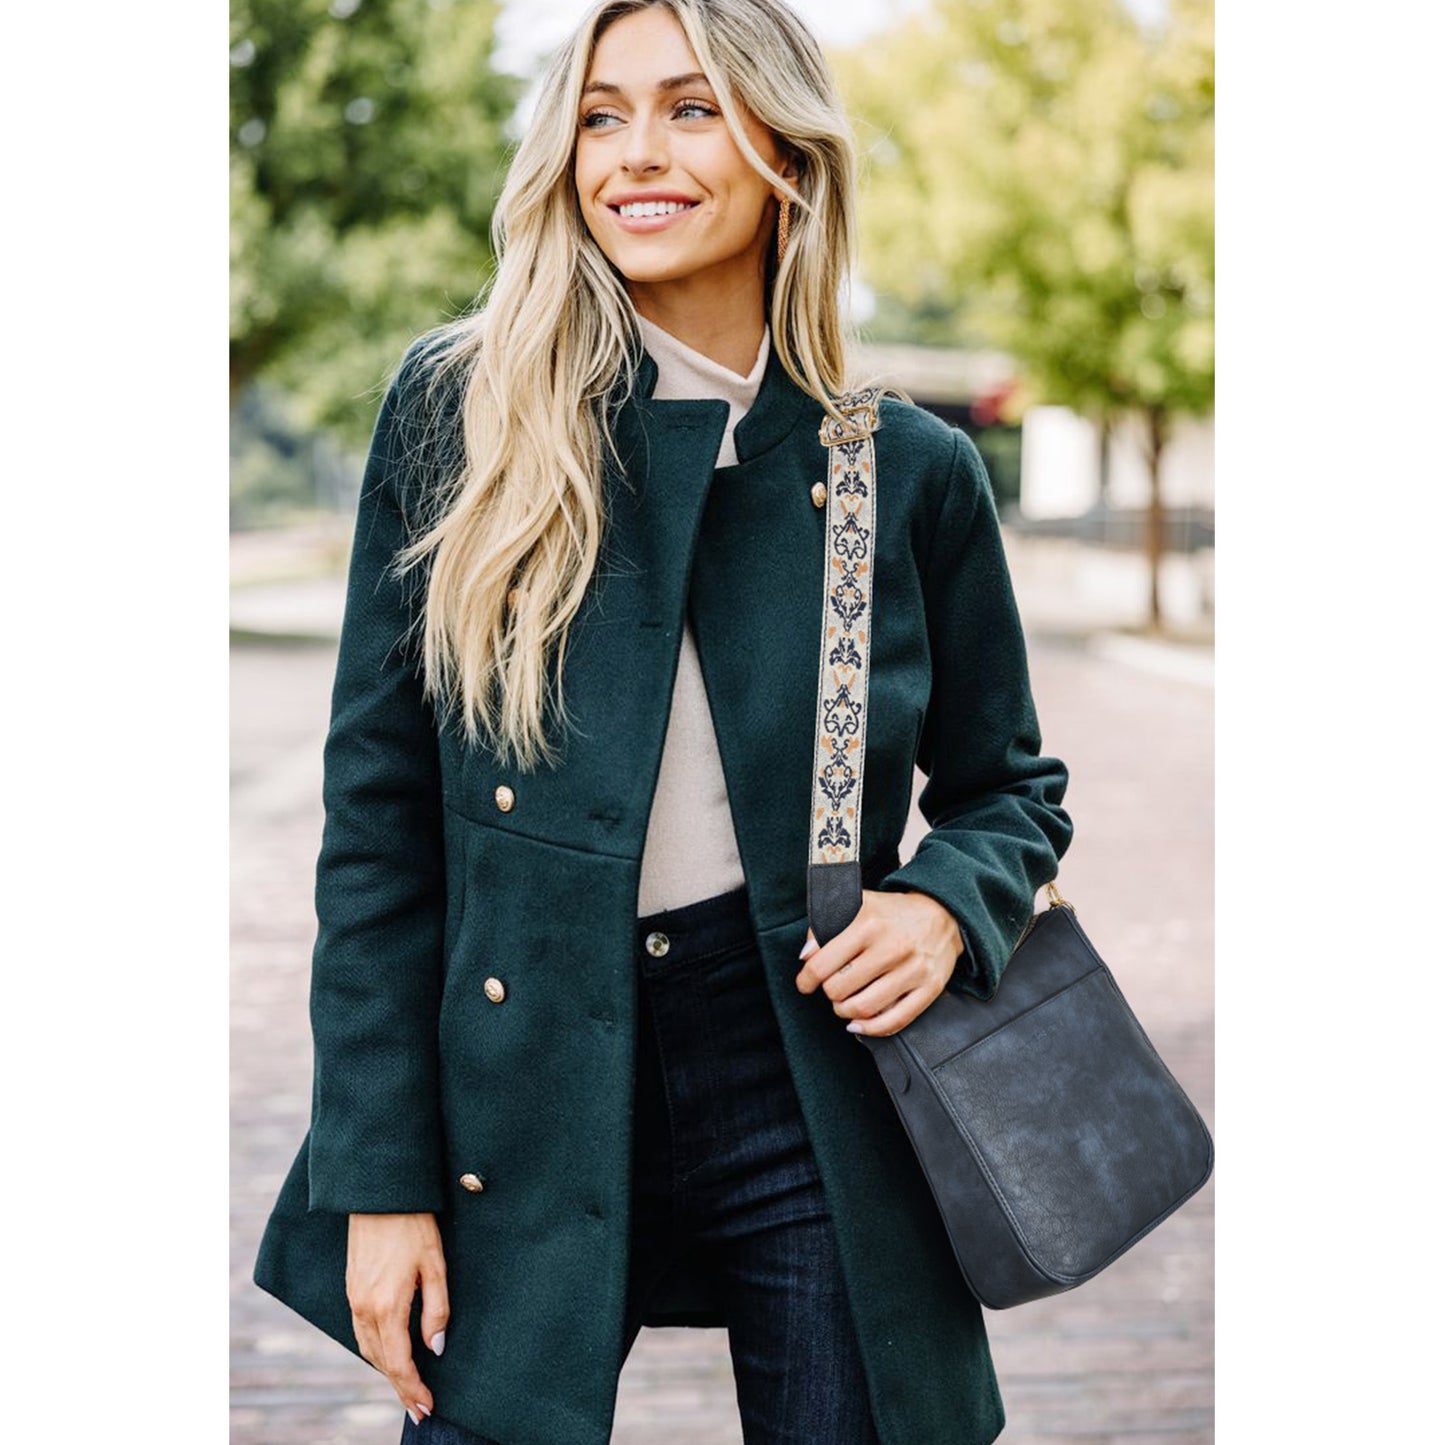 BOSTANTEN Crossbody Bags for Women Trendy Vegan Leather Hobo Purses Shoulder Handbags With Wide Shoulder Strap